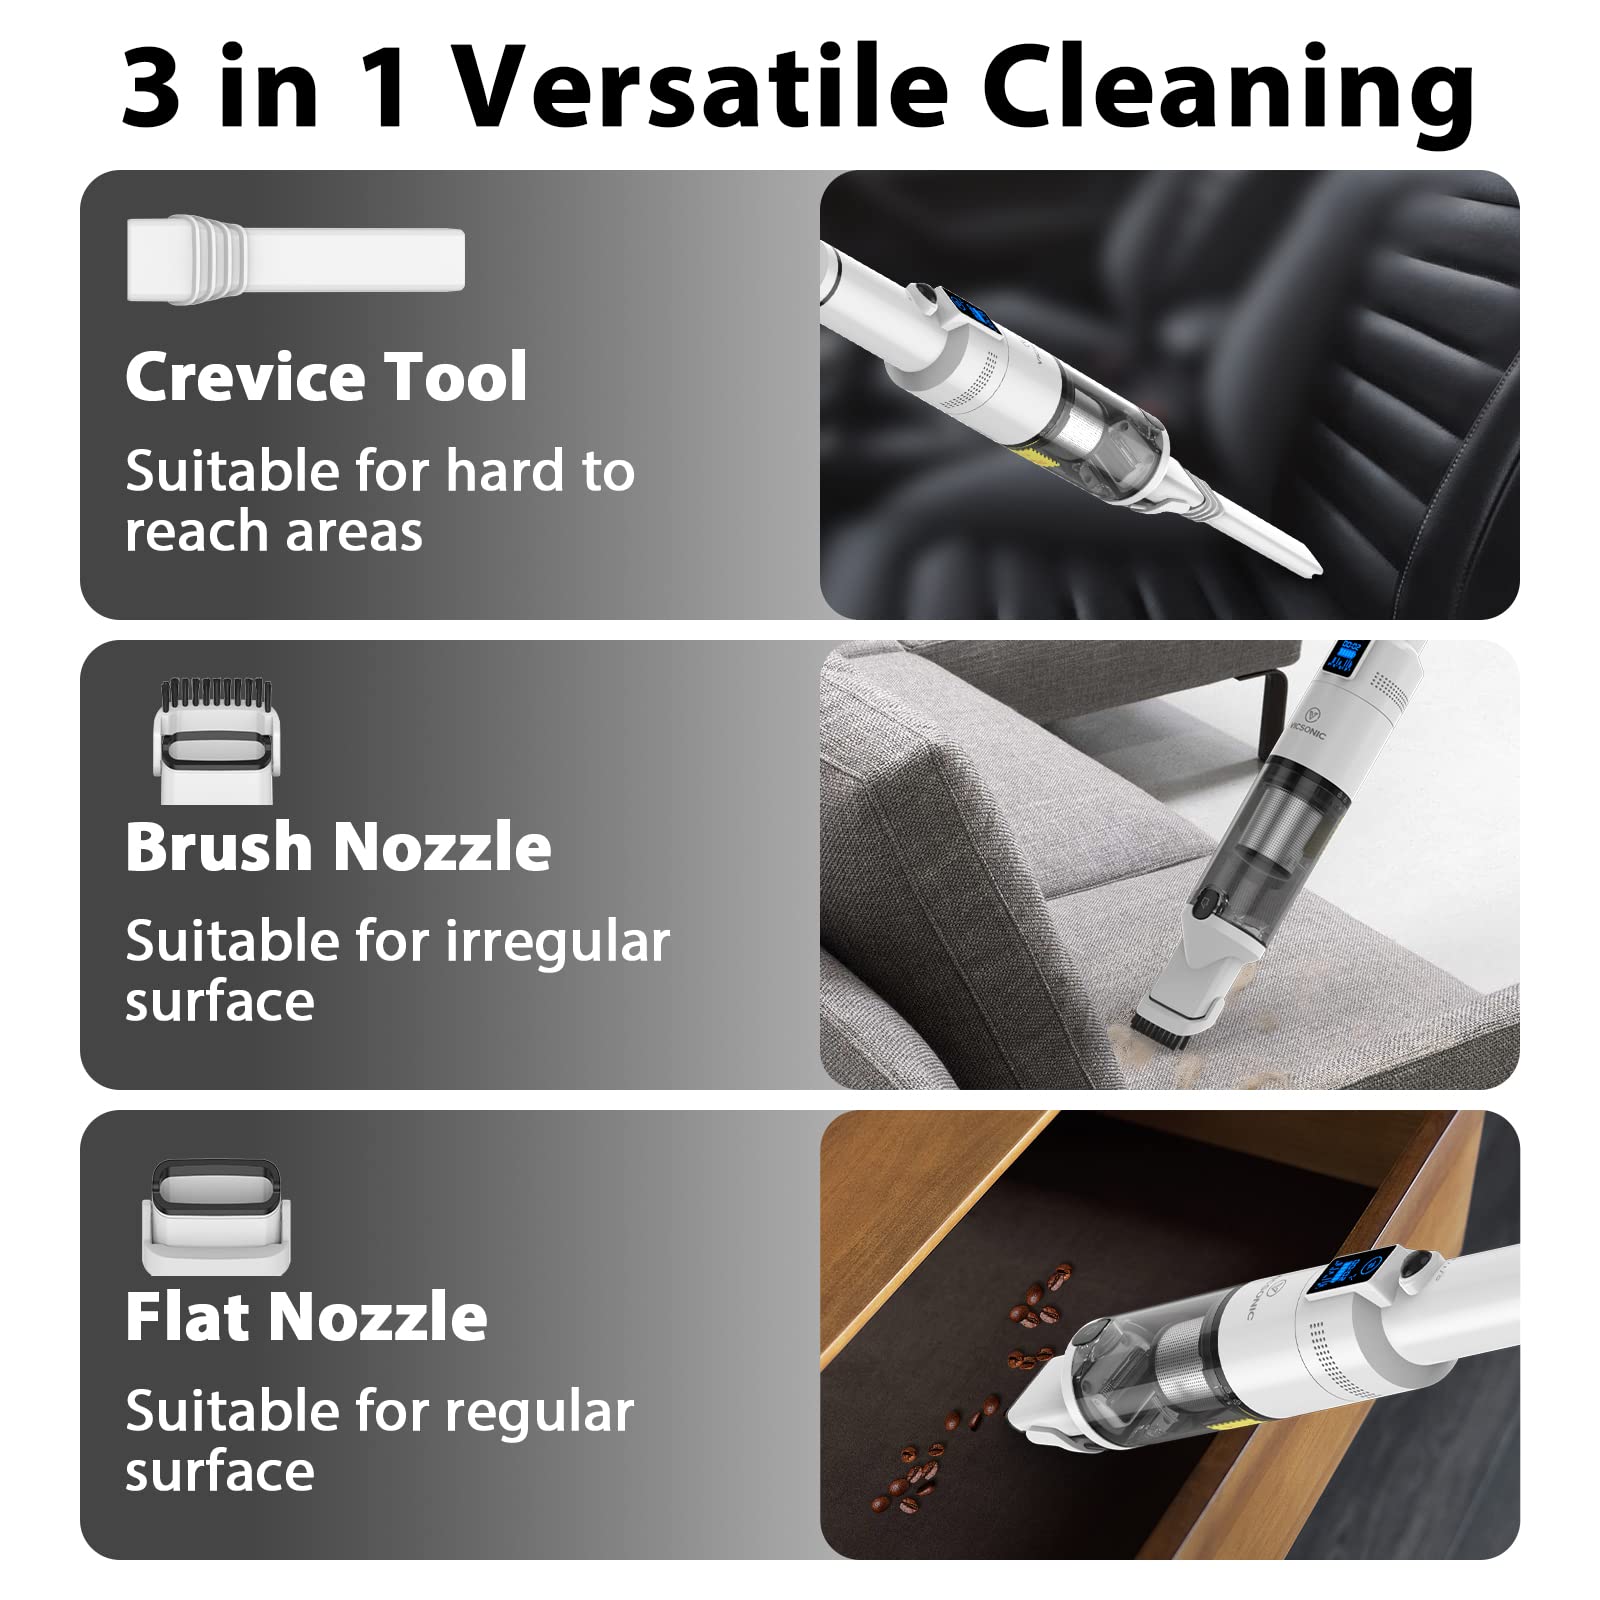 VICSONIC Handheld Vacuum Cleaner H2 - Black / White